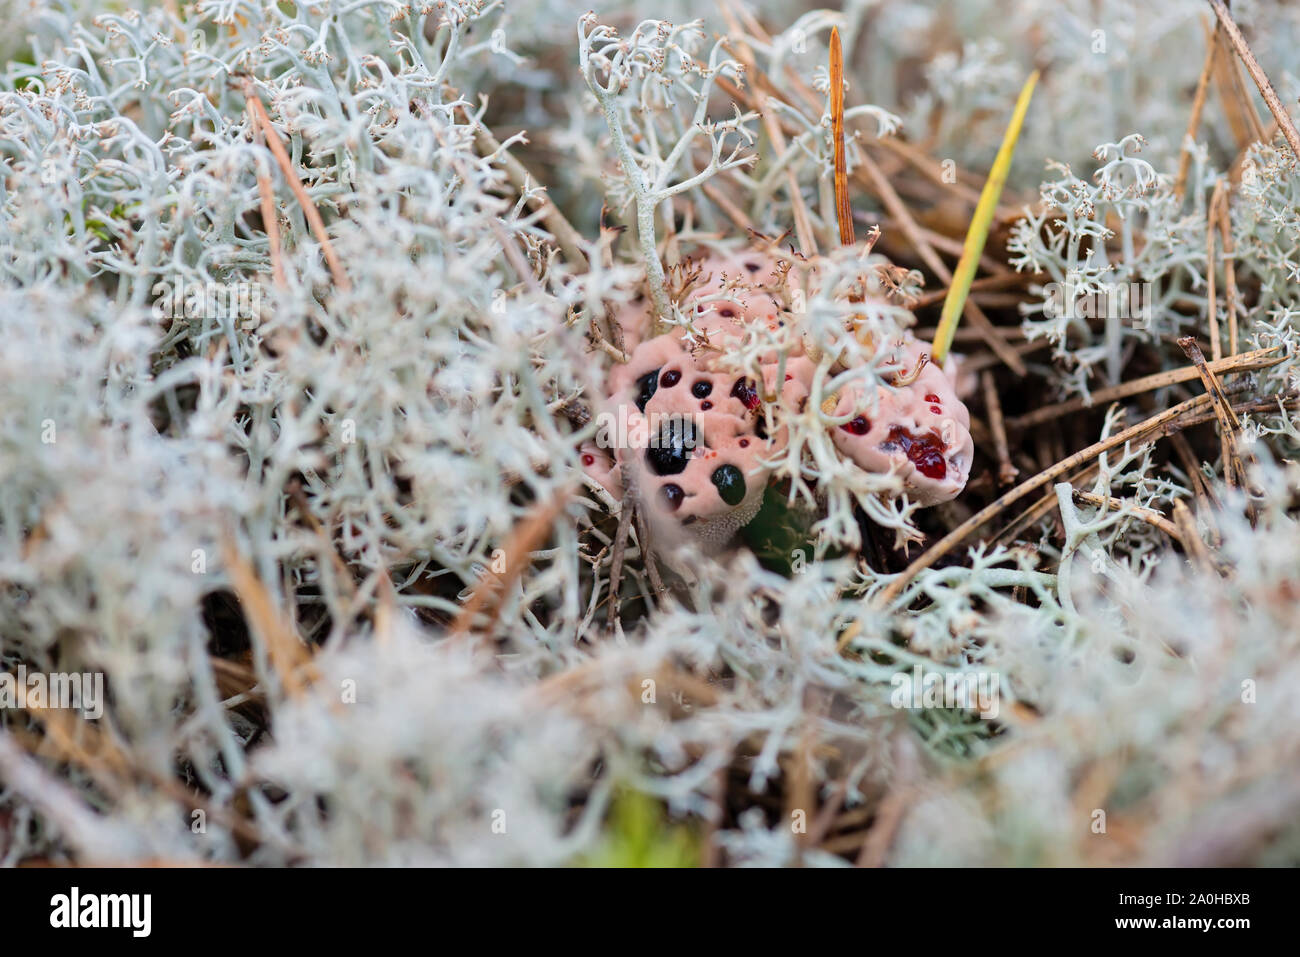 Hydnellum peckii - mushroom in mossy forest Stock Photo